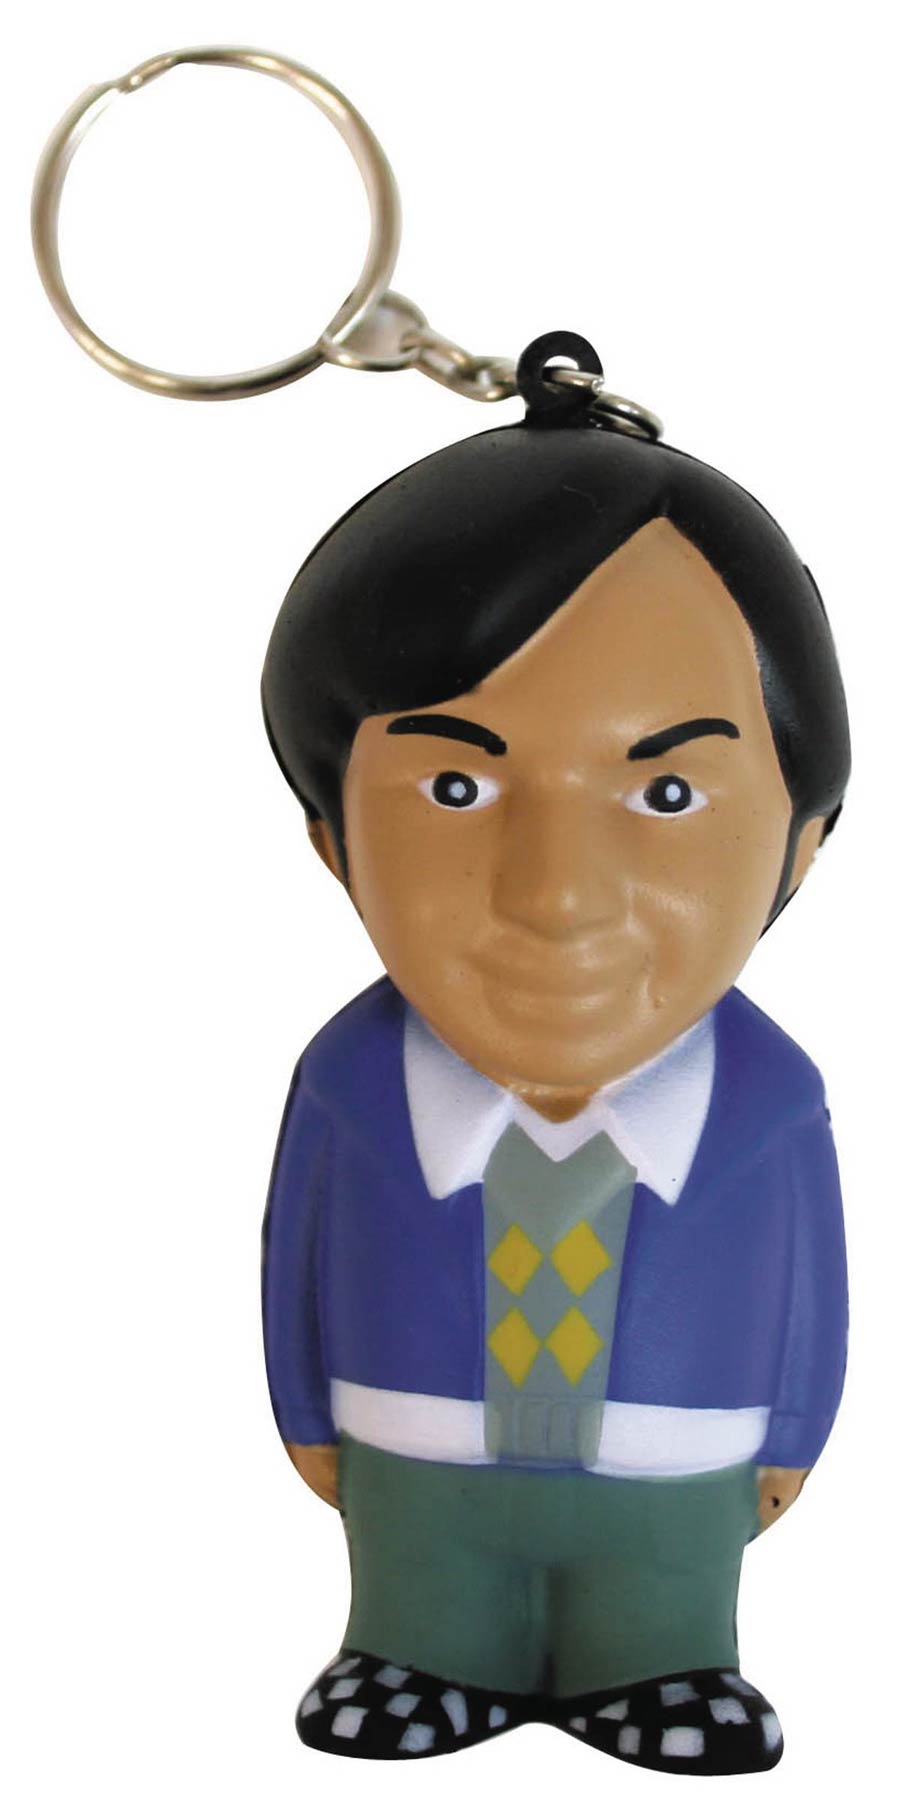 Big Bang Theory 3-Inch Stress Doll Keychain - Rajesh